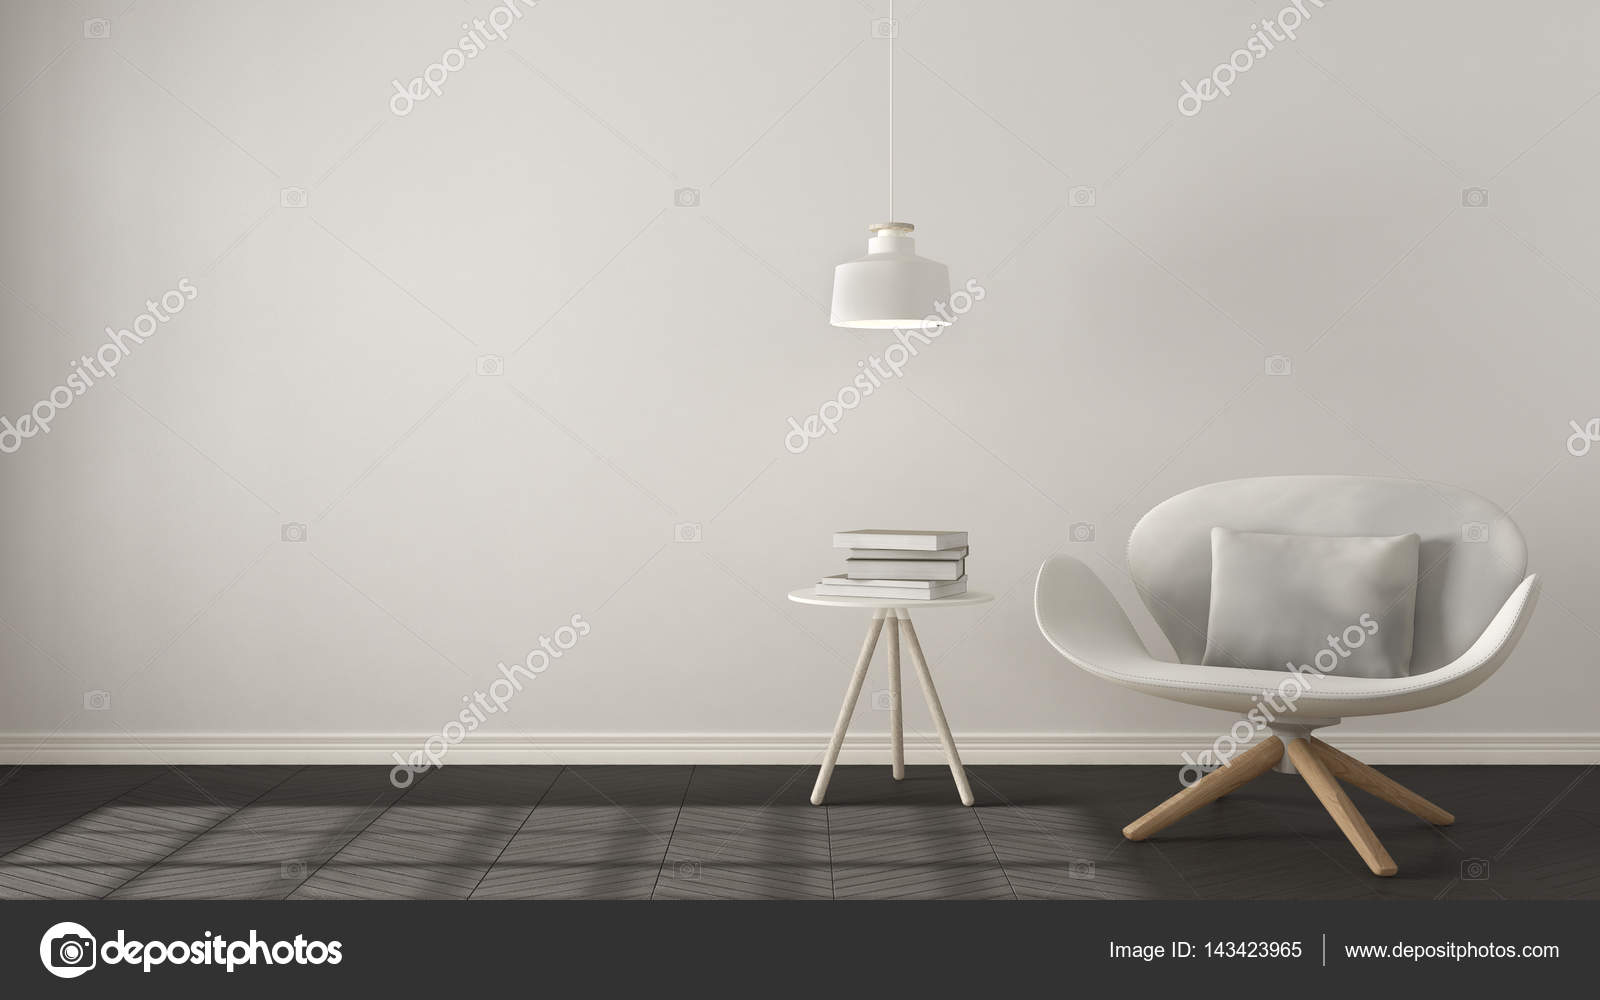 İskandinav minimalist arka plan, beyaz koltuk tablo ile Stok